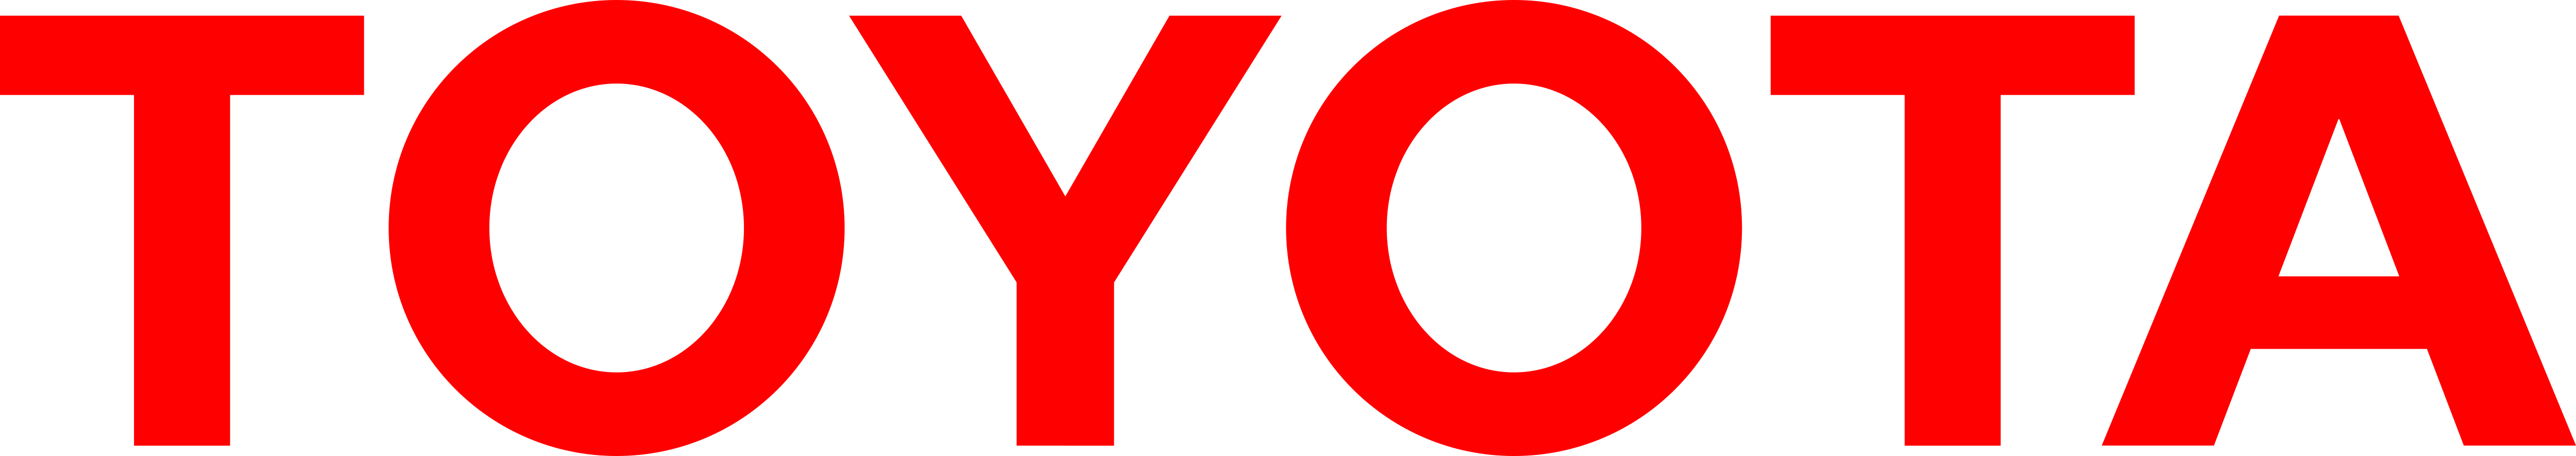 Toyota Logo Vector File